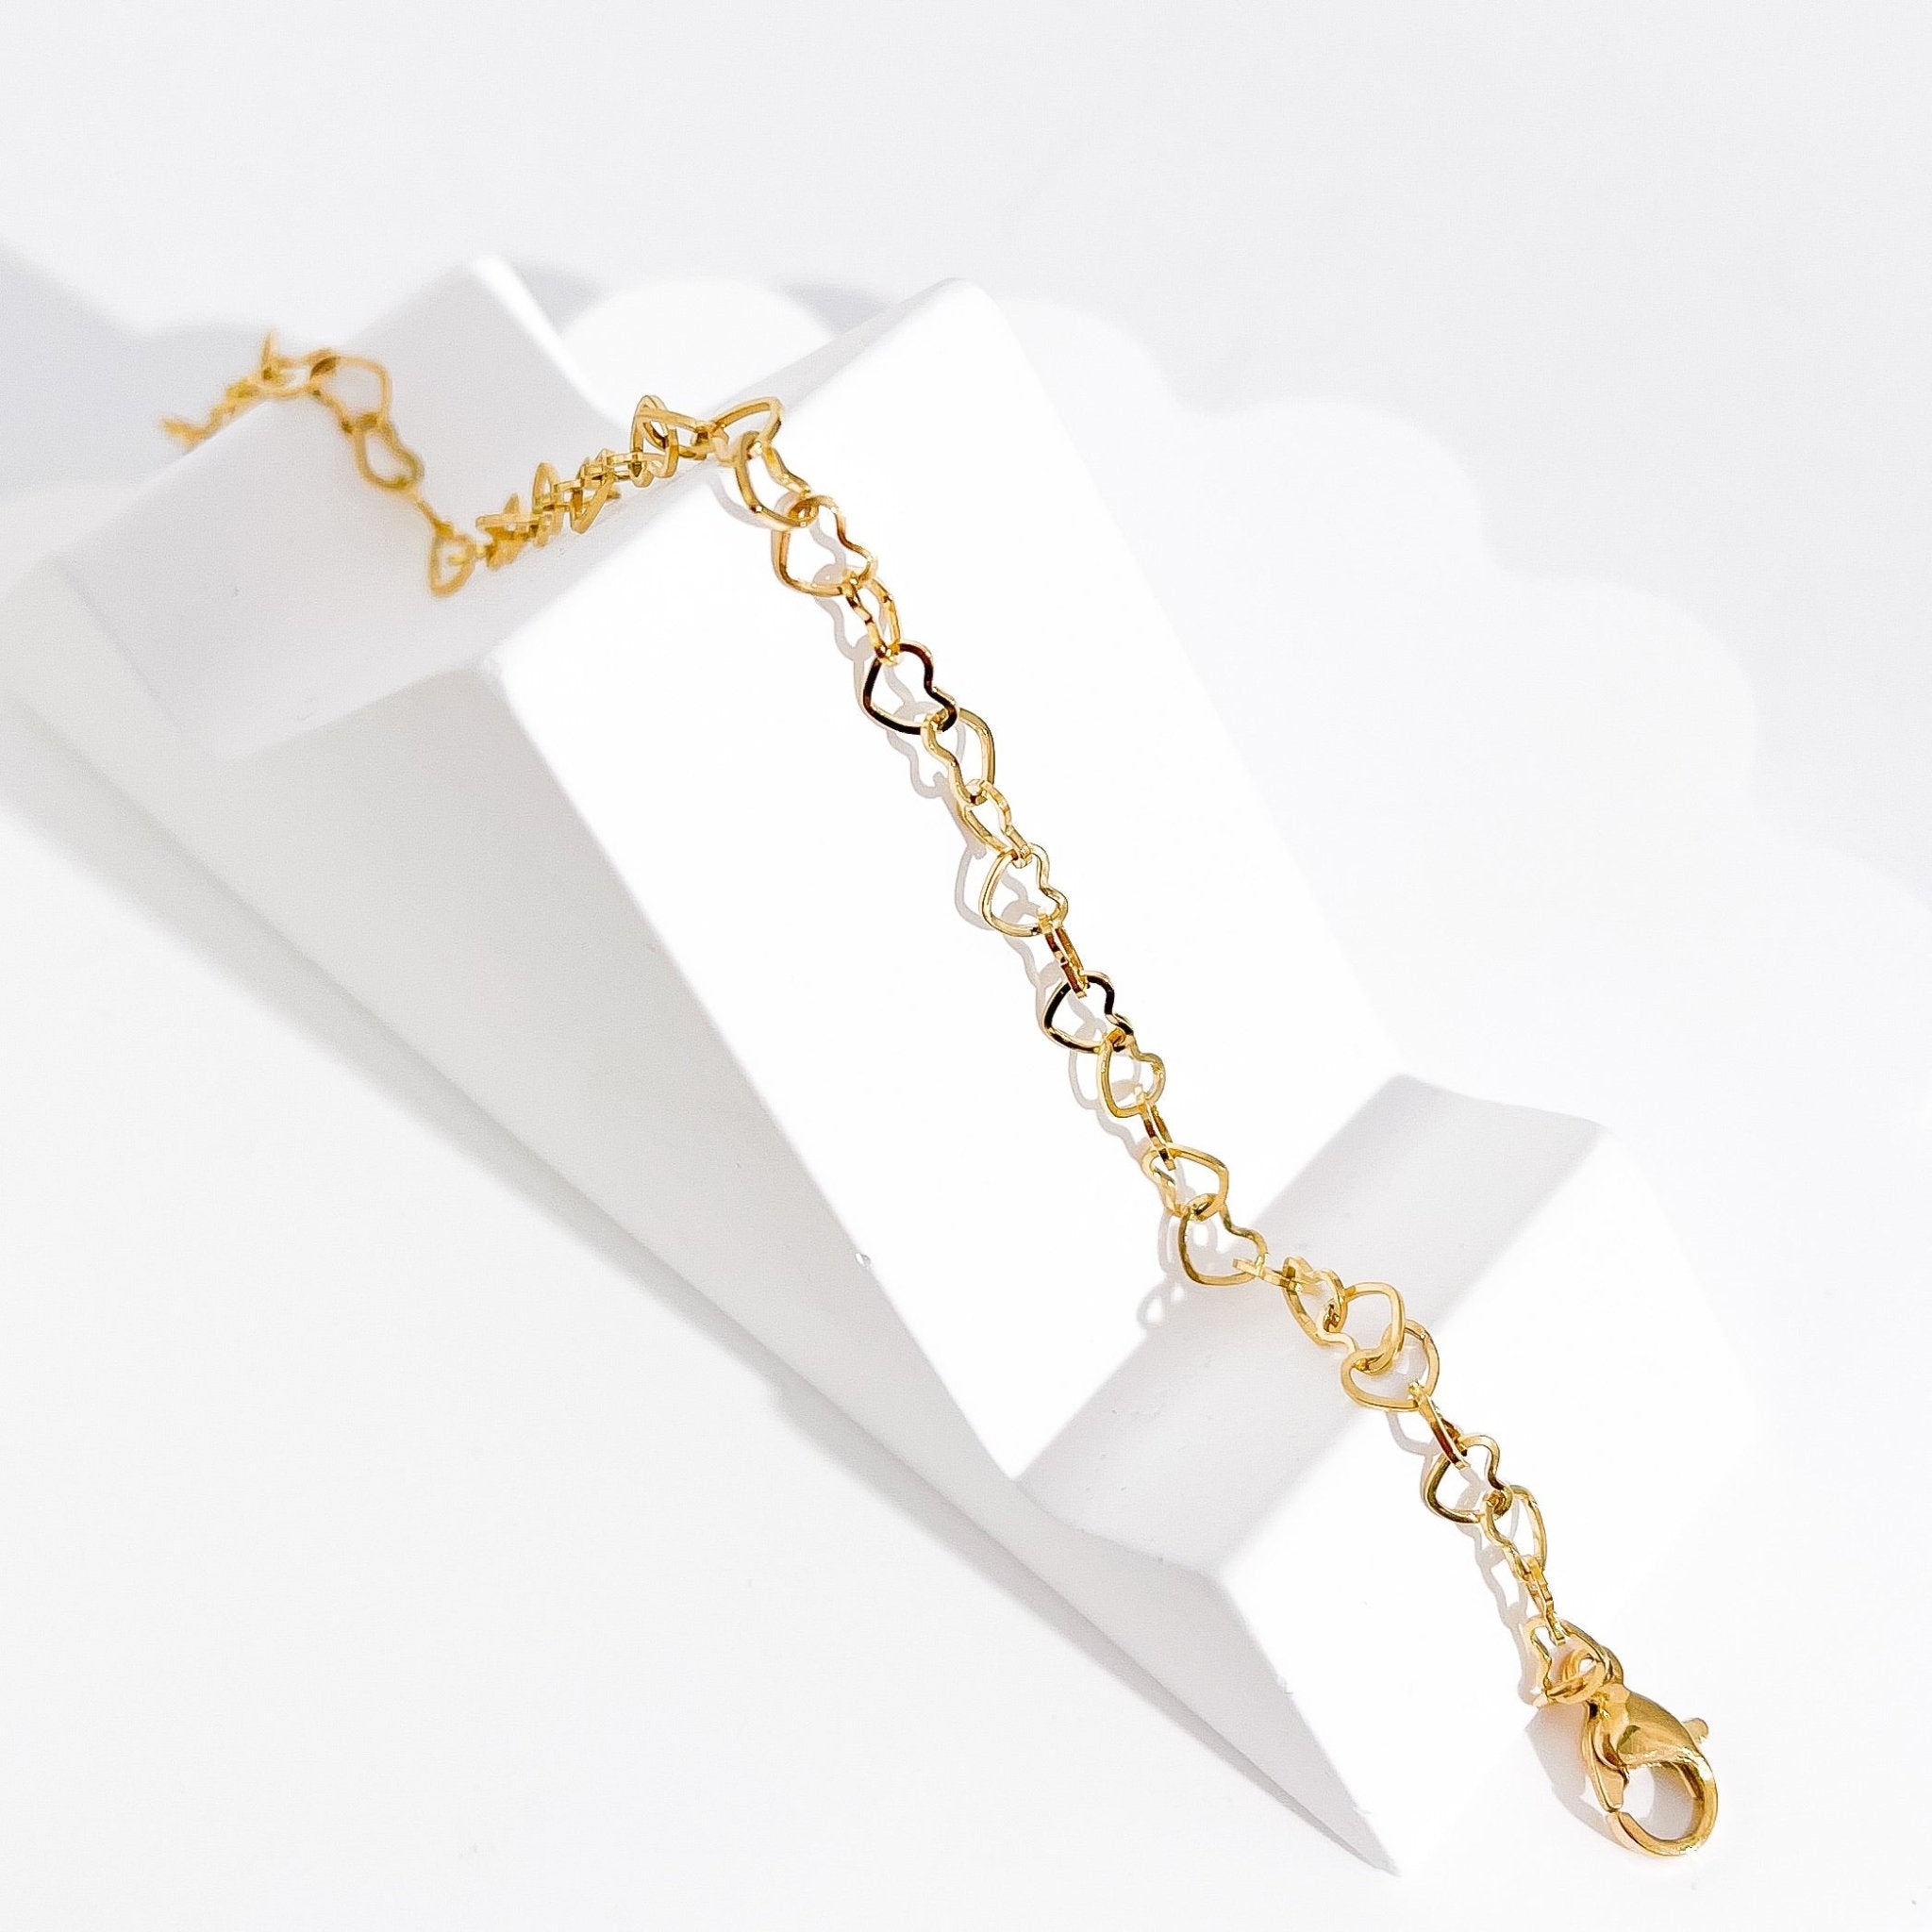 Celia Heart Chain Bracelet in Gold - Flaire & Co.